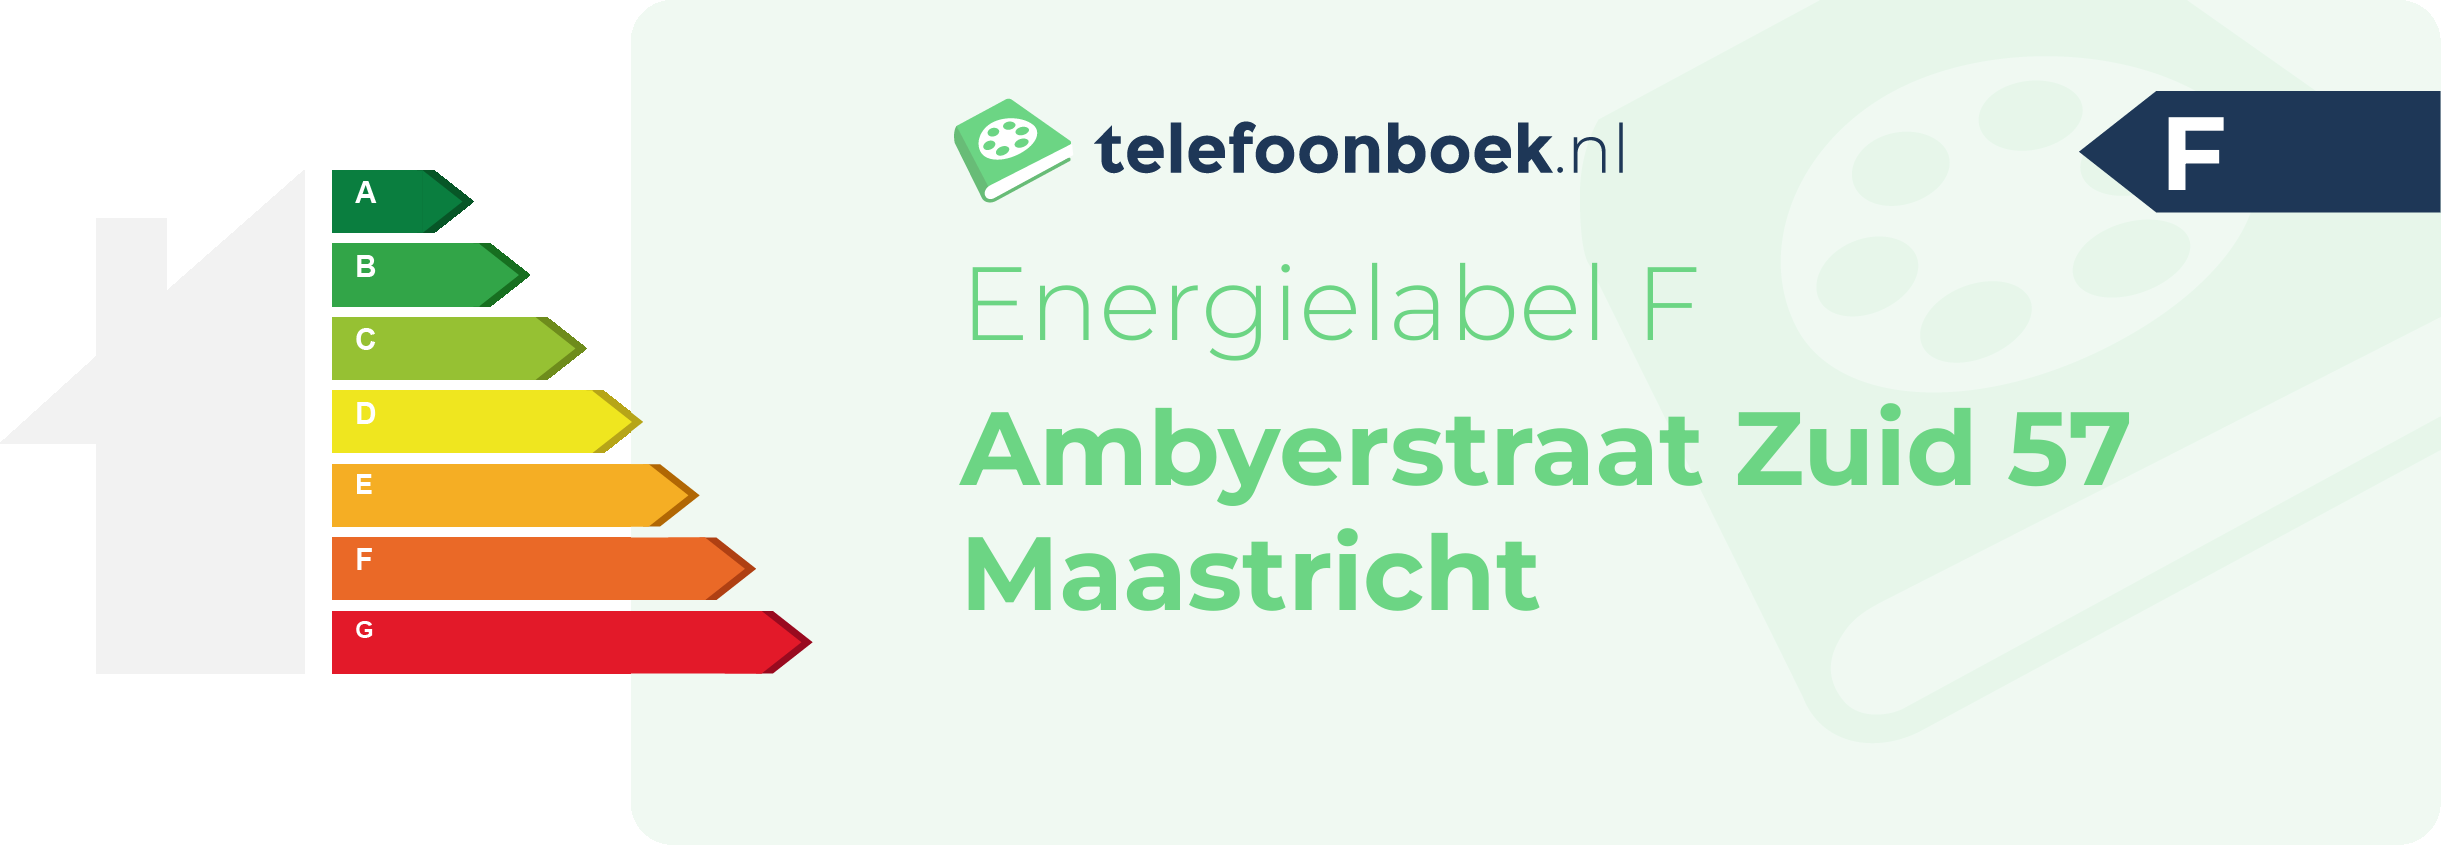 Energielabel Ambyerstraat Zuid 57 Maastricht